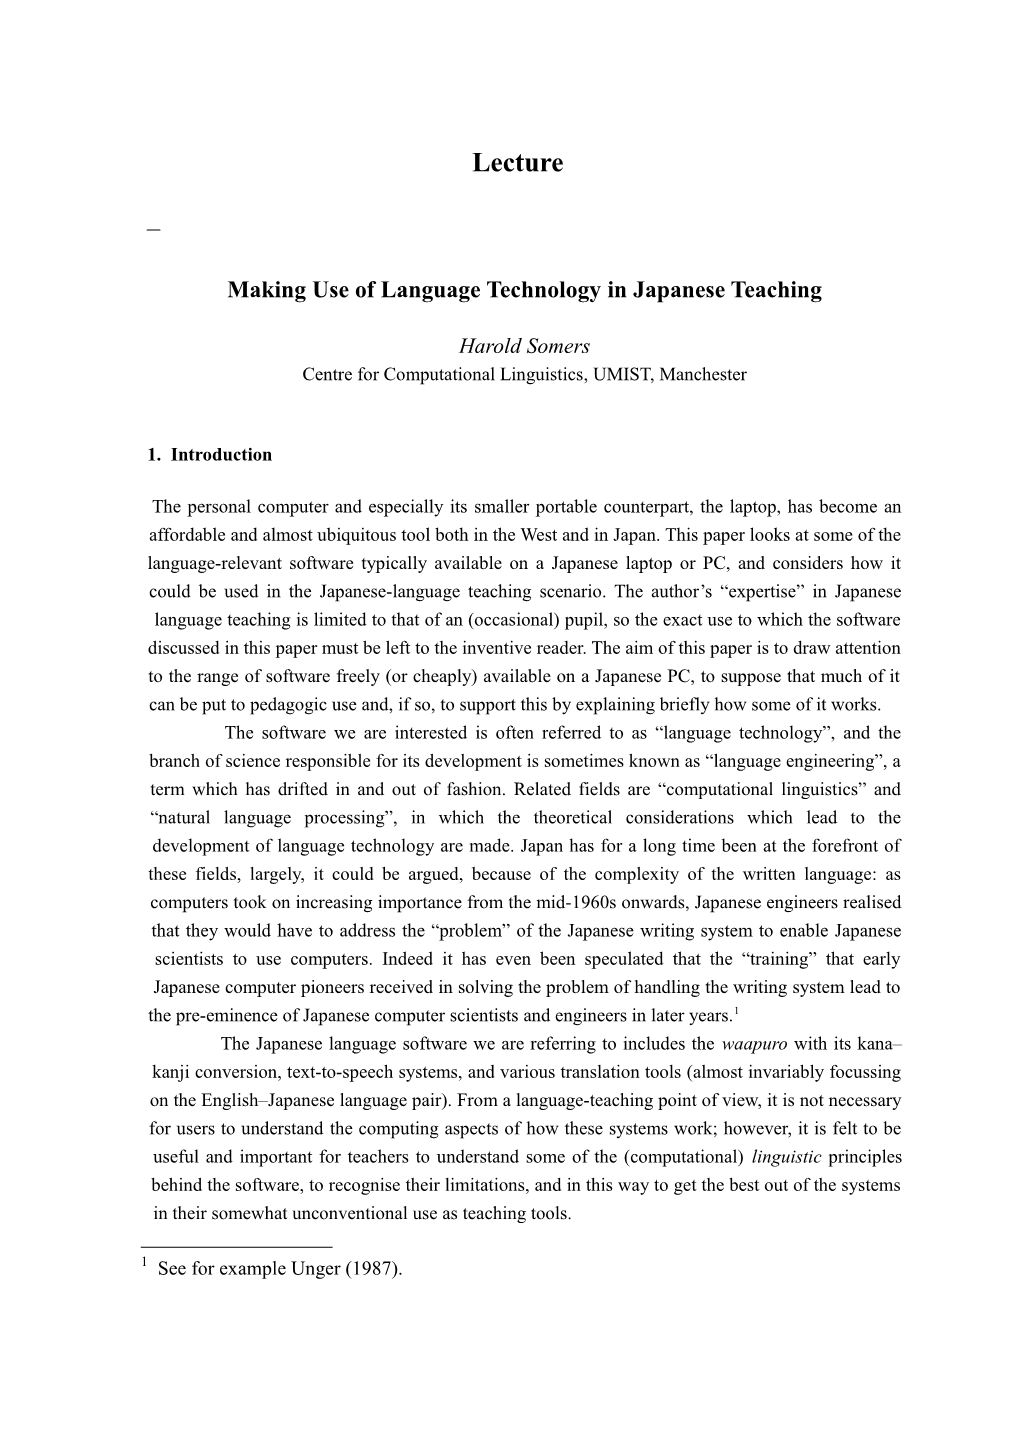 Making Use of Language Technology in Japanese Teaching